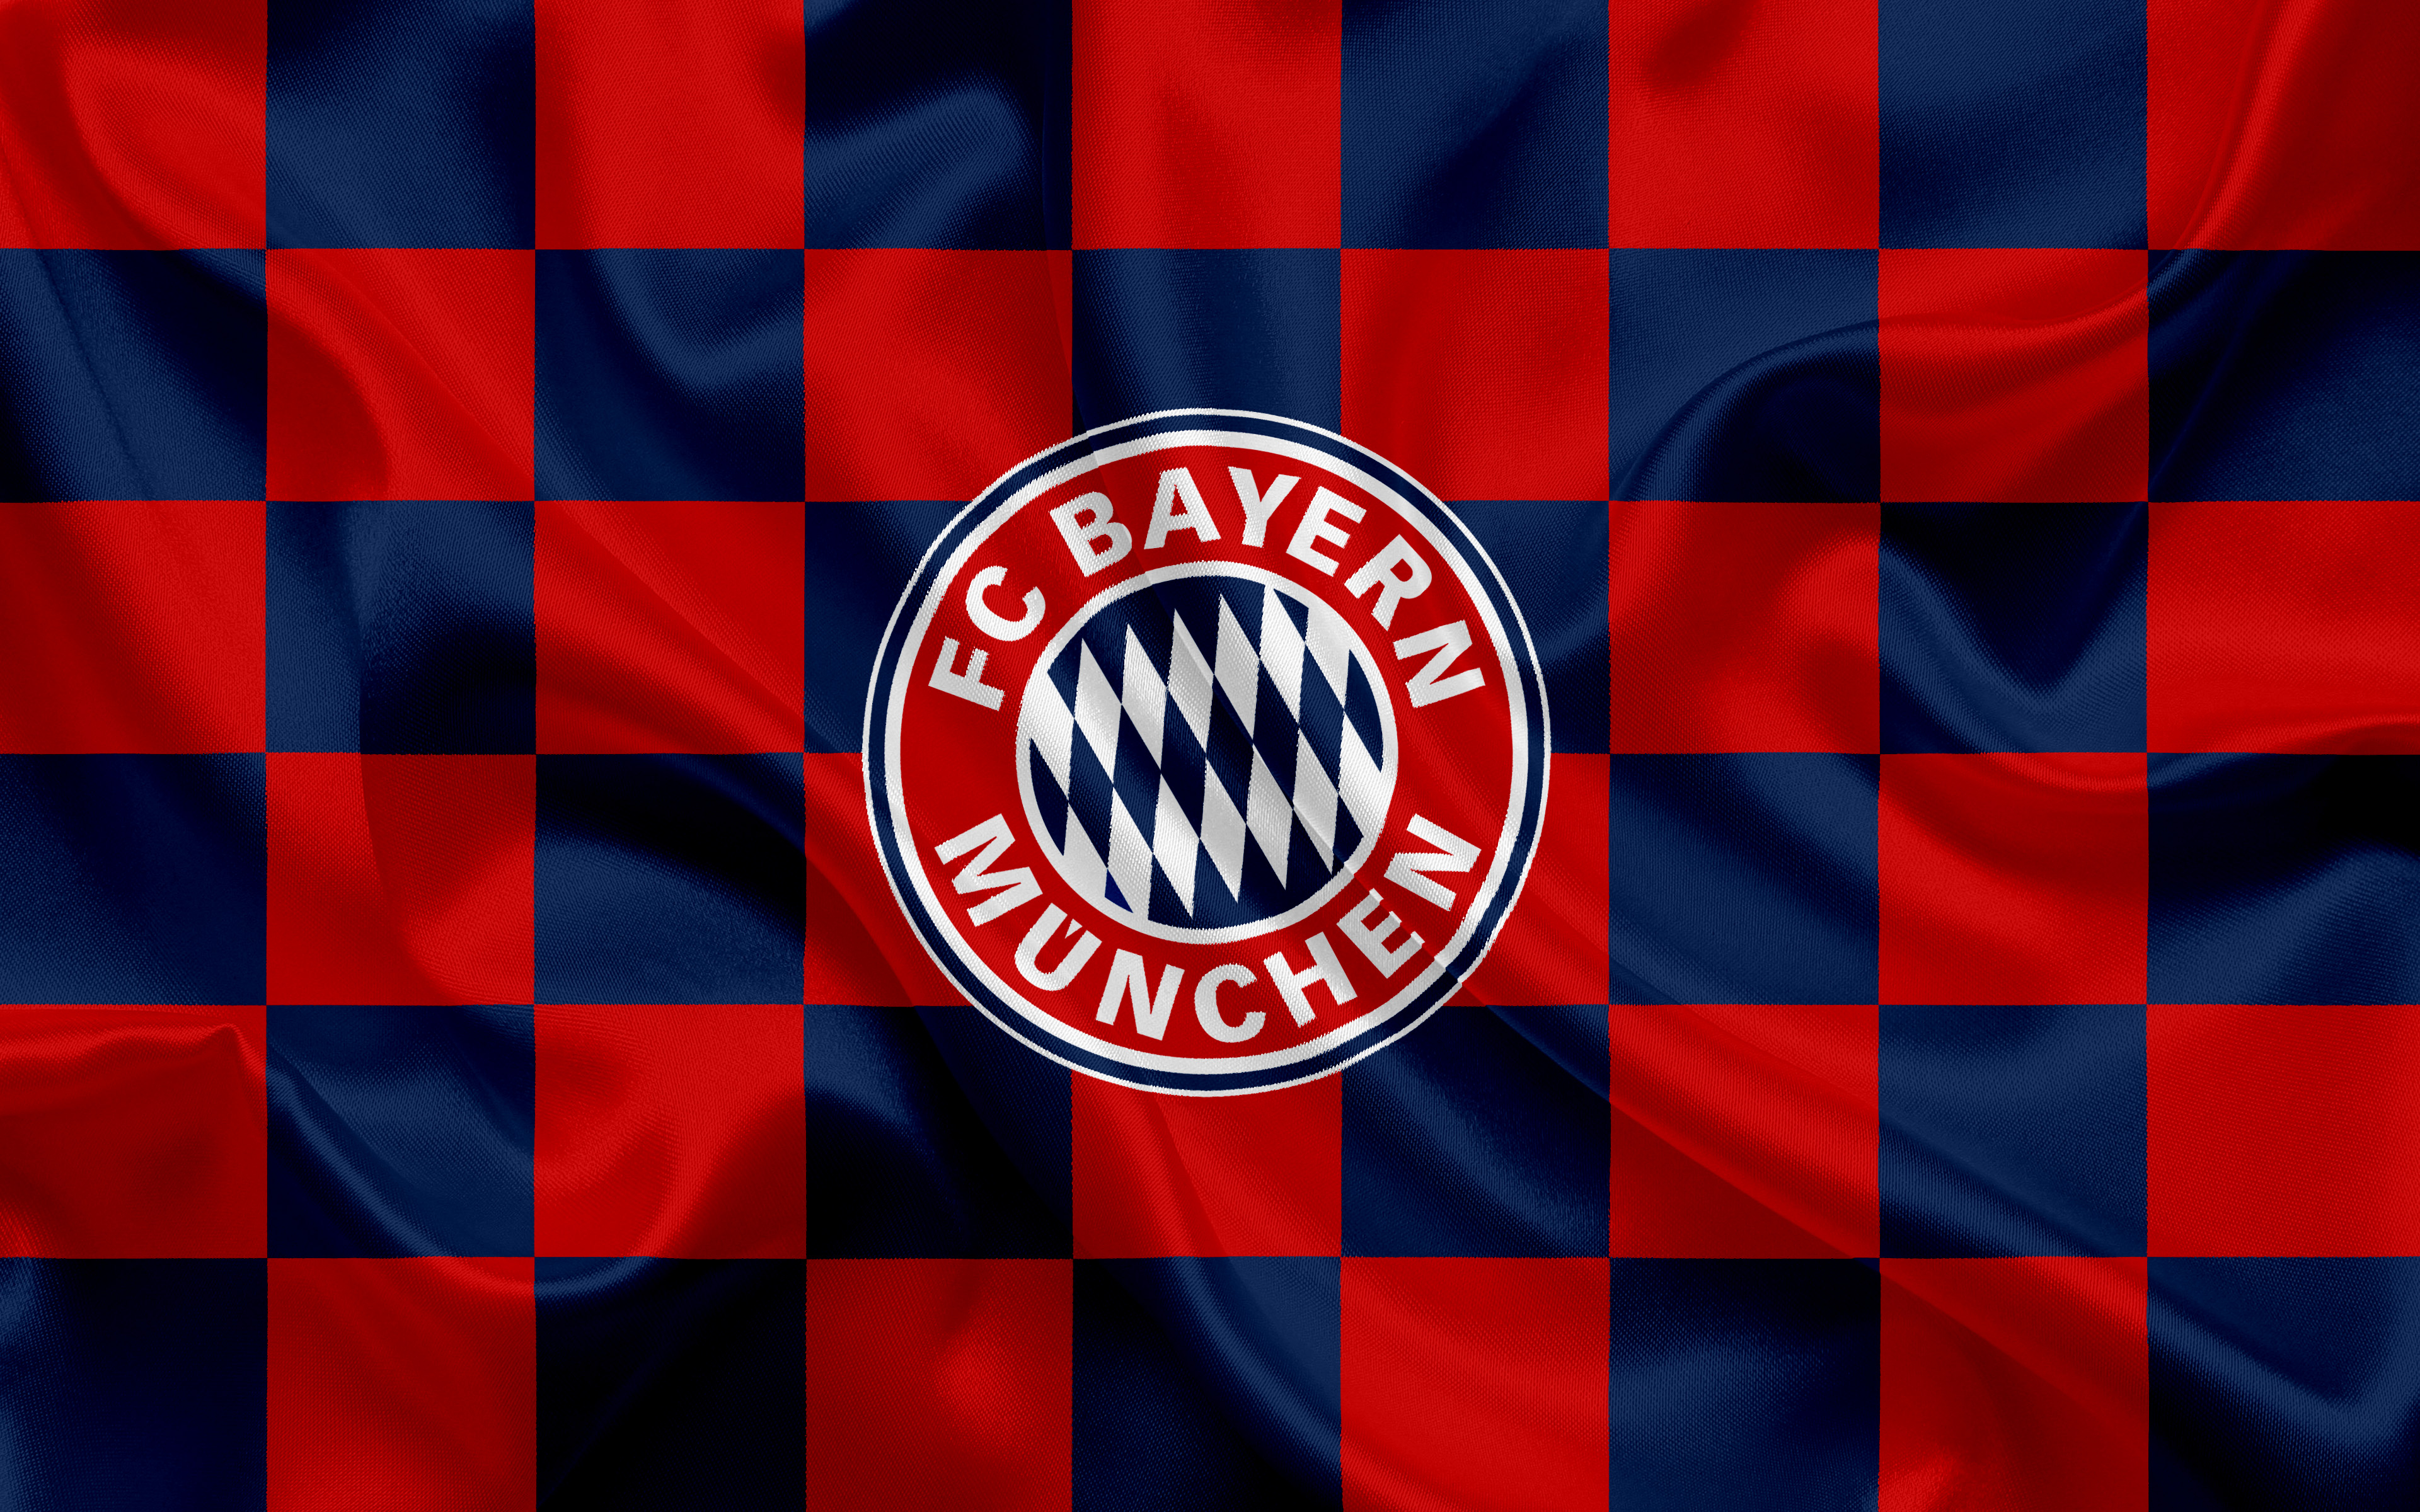 fc bayern munich, emblem, sports, logo, soccer